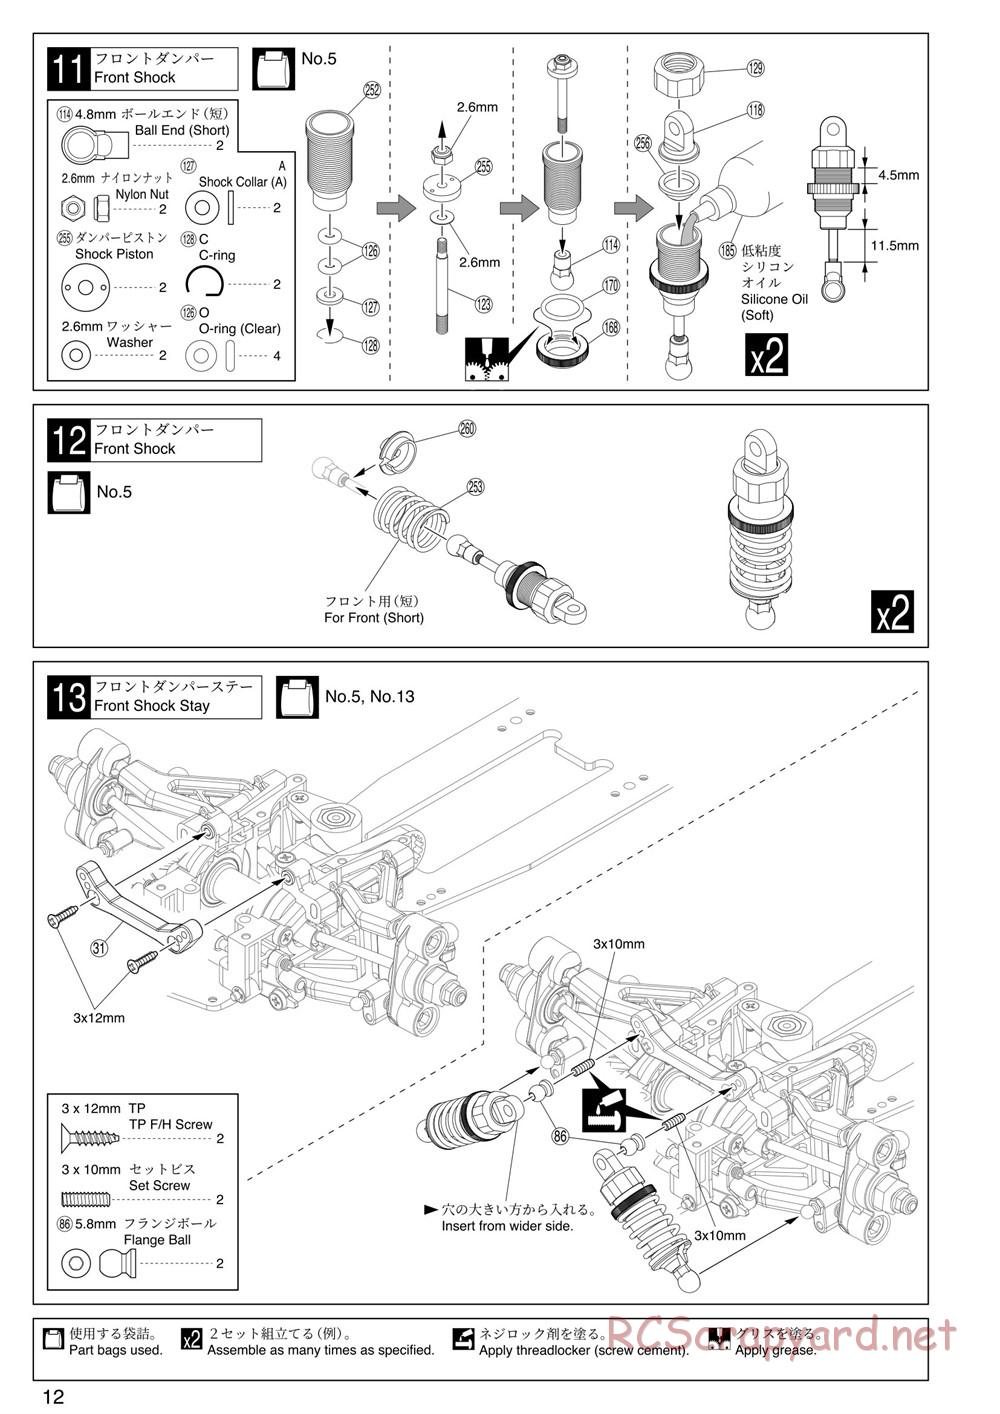 Kyosho - V-One RRR Evo - Manual - Page 12